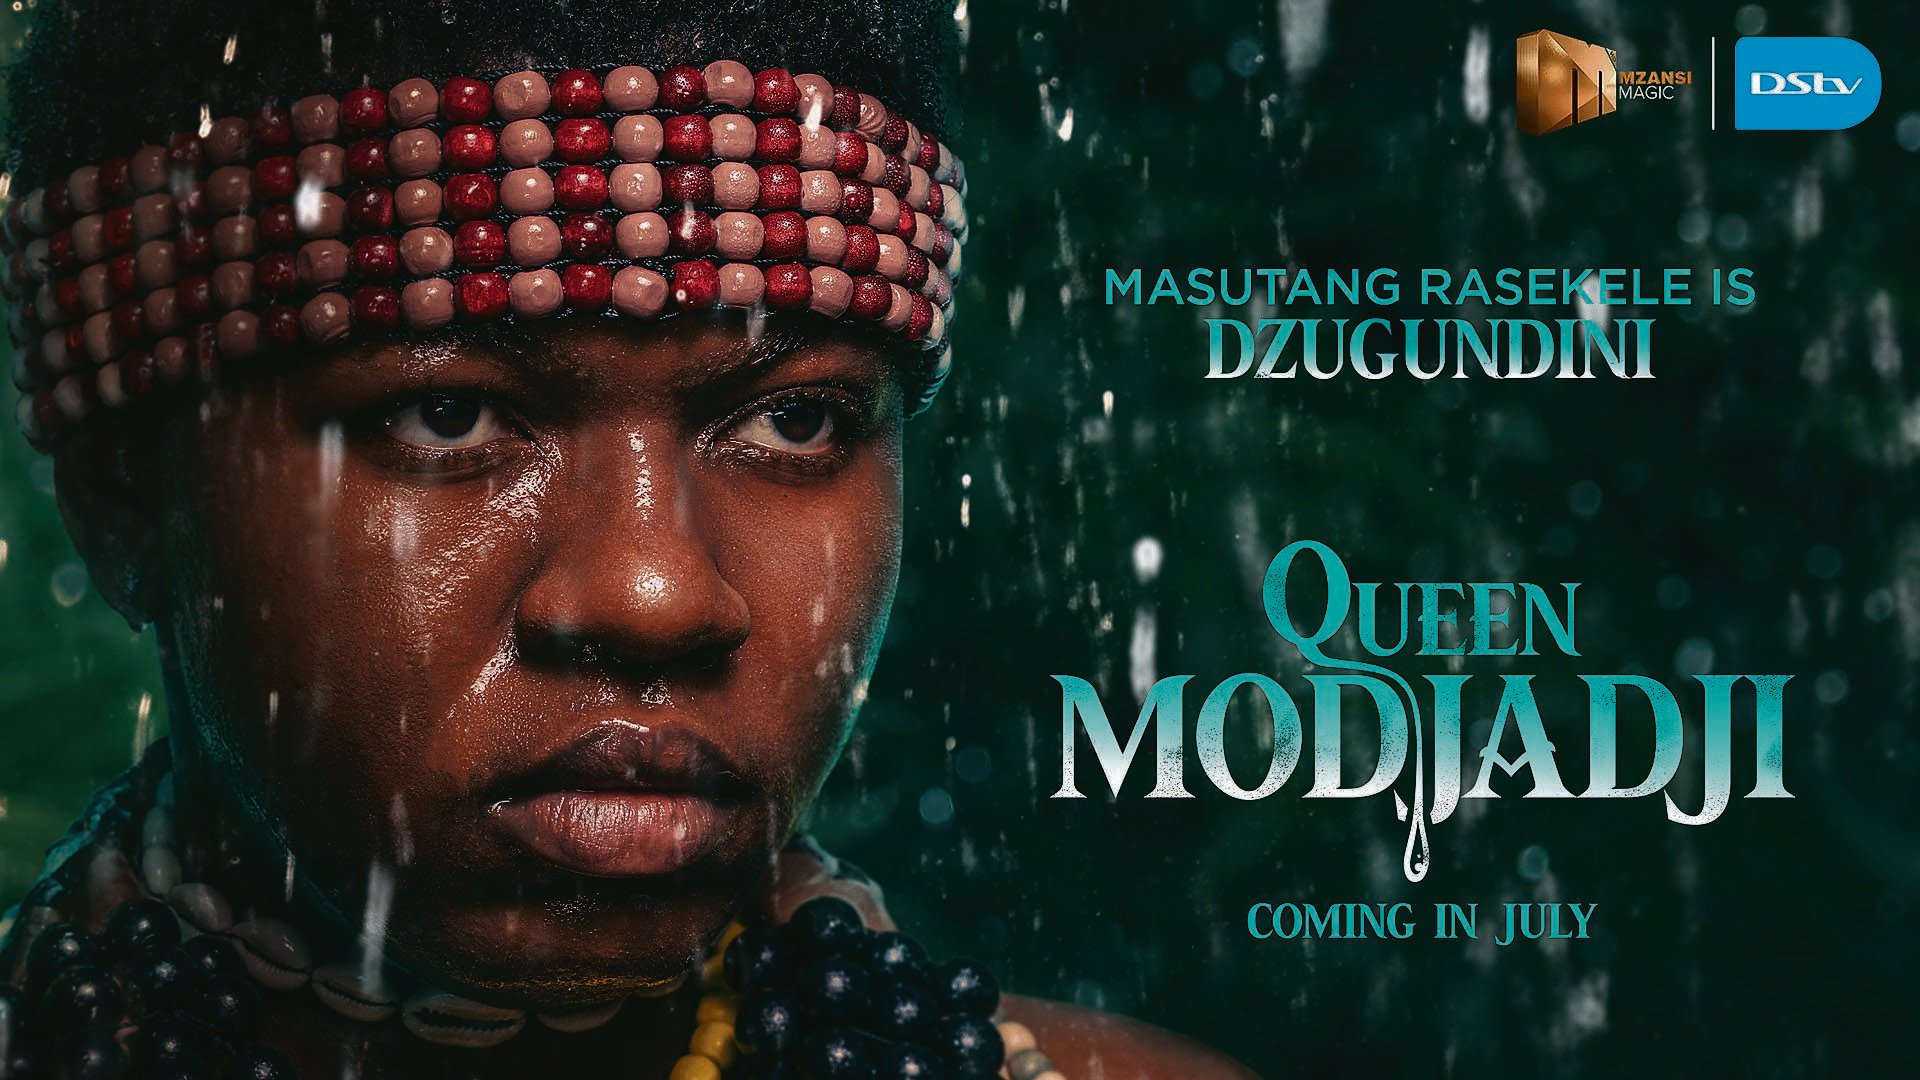 Masutang Rasekele plays Dzugudini on Queen Modjadji.